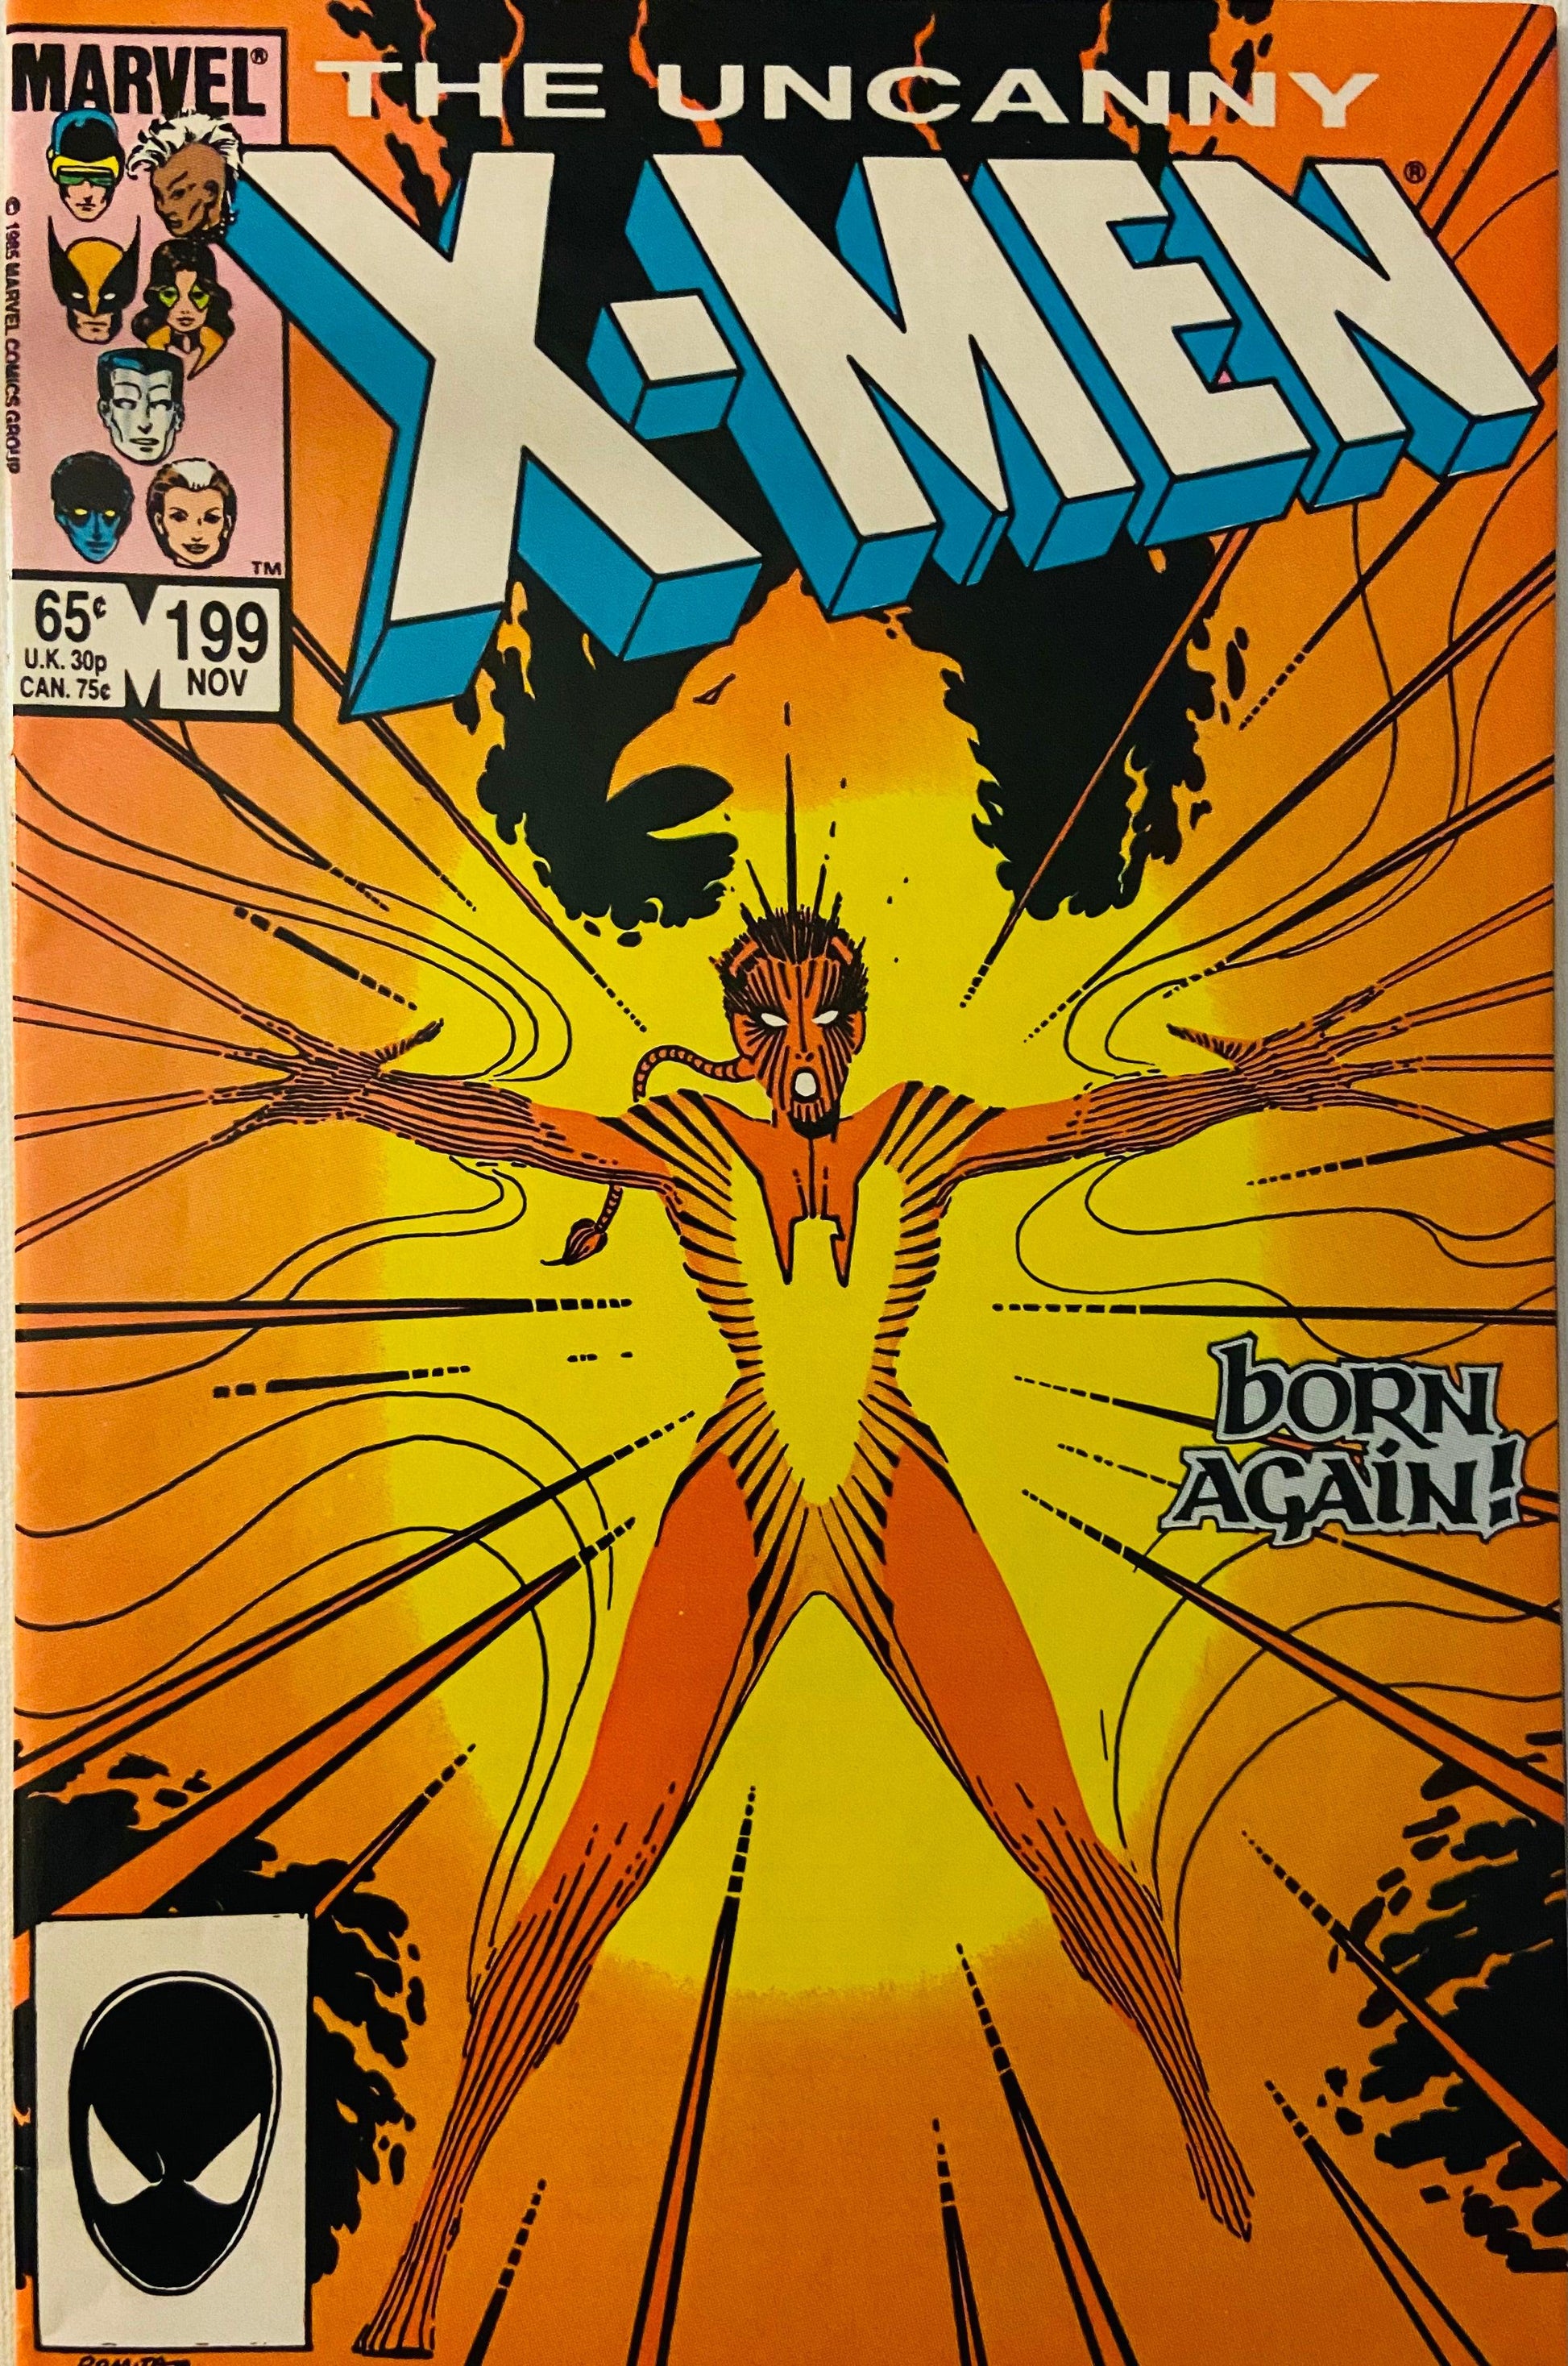 Uncanny X-men #199 - HolyGrail Comix